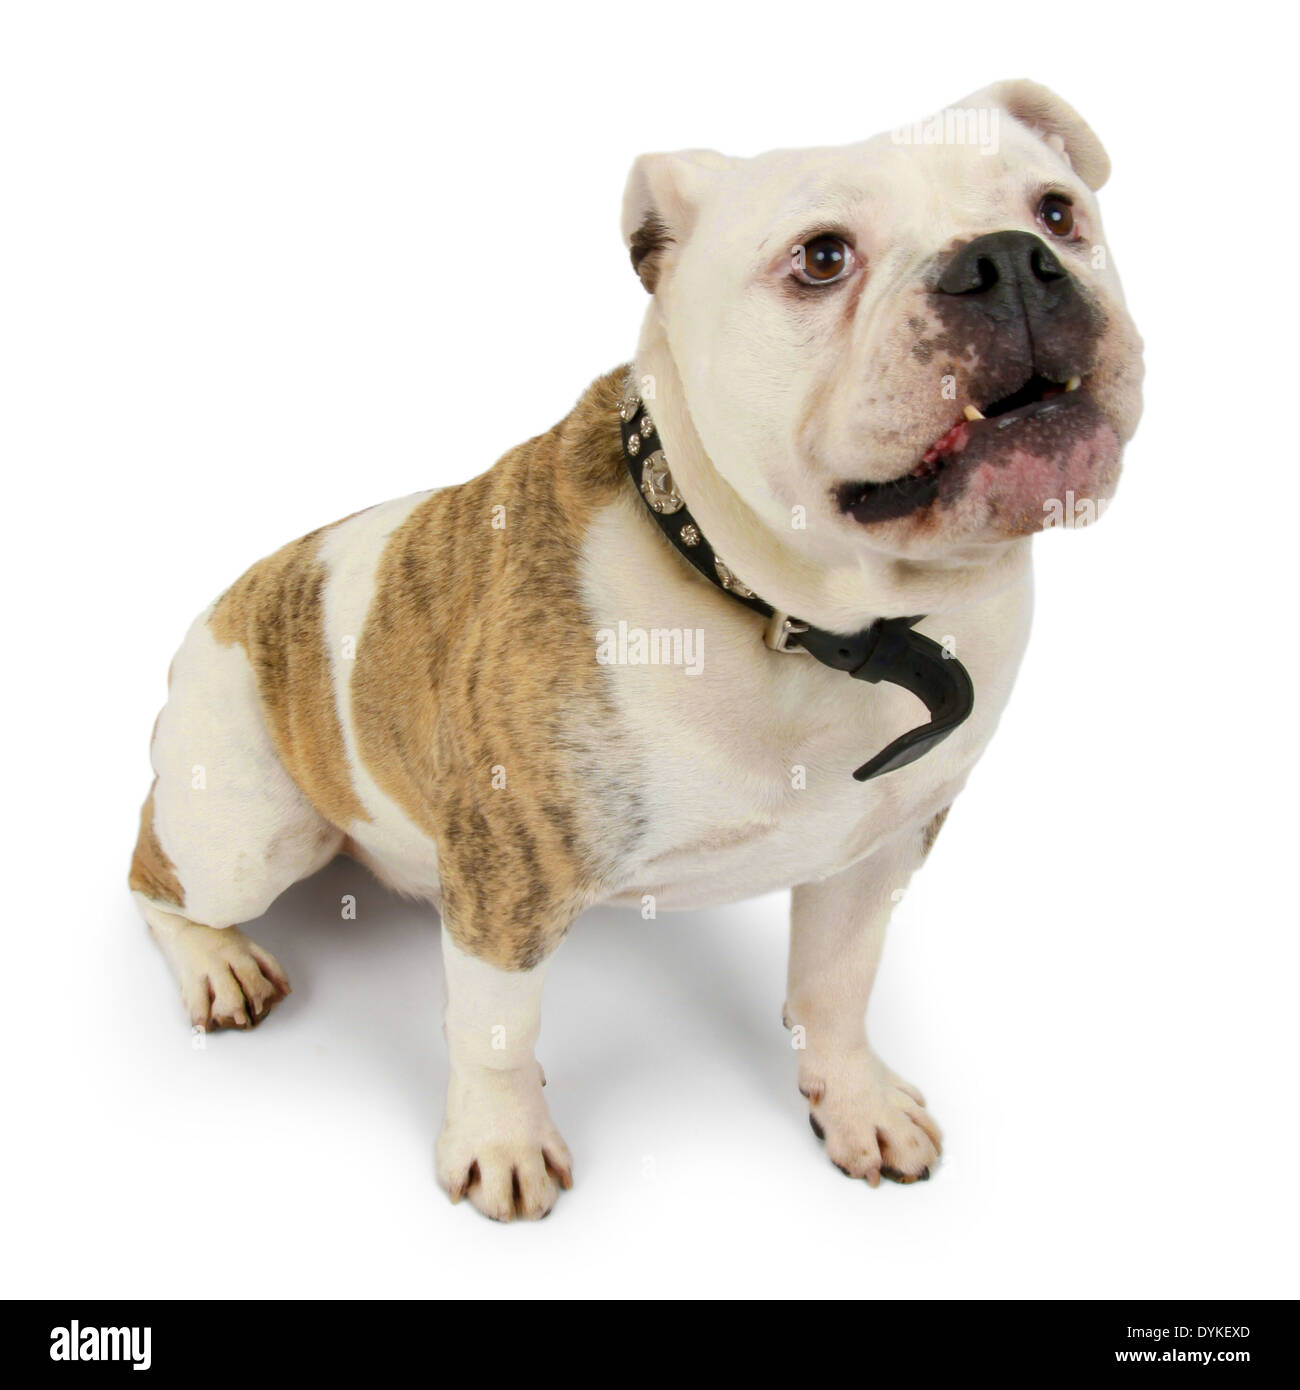 Englische Bulldogge, Canis lupus f. familiaris, bulldog Anglais, Englische Bulldogge vor weissen Hintergrund Banque D'Images